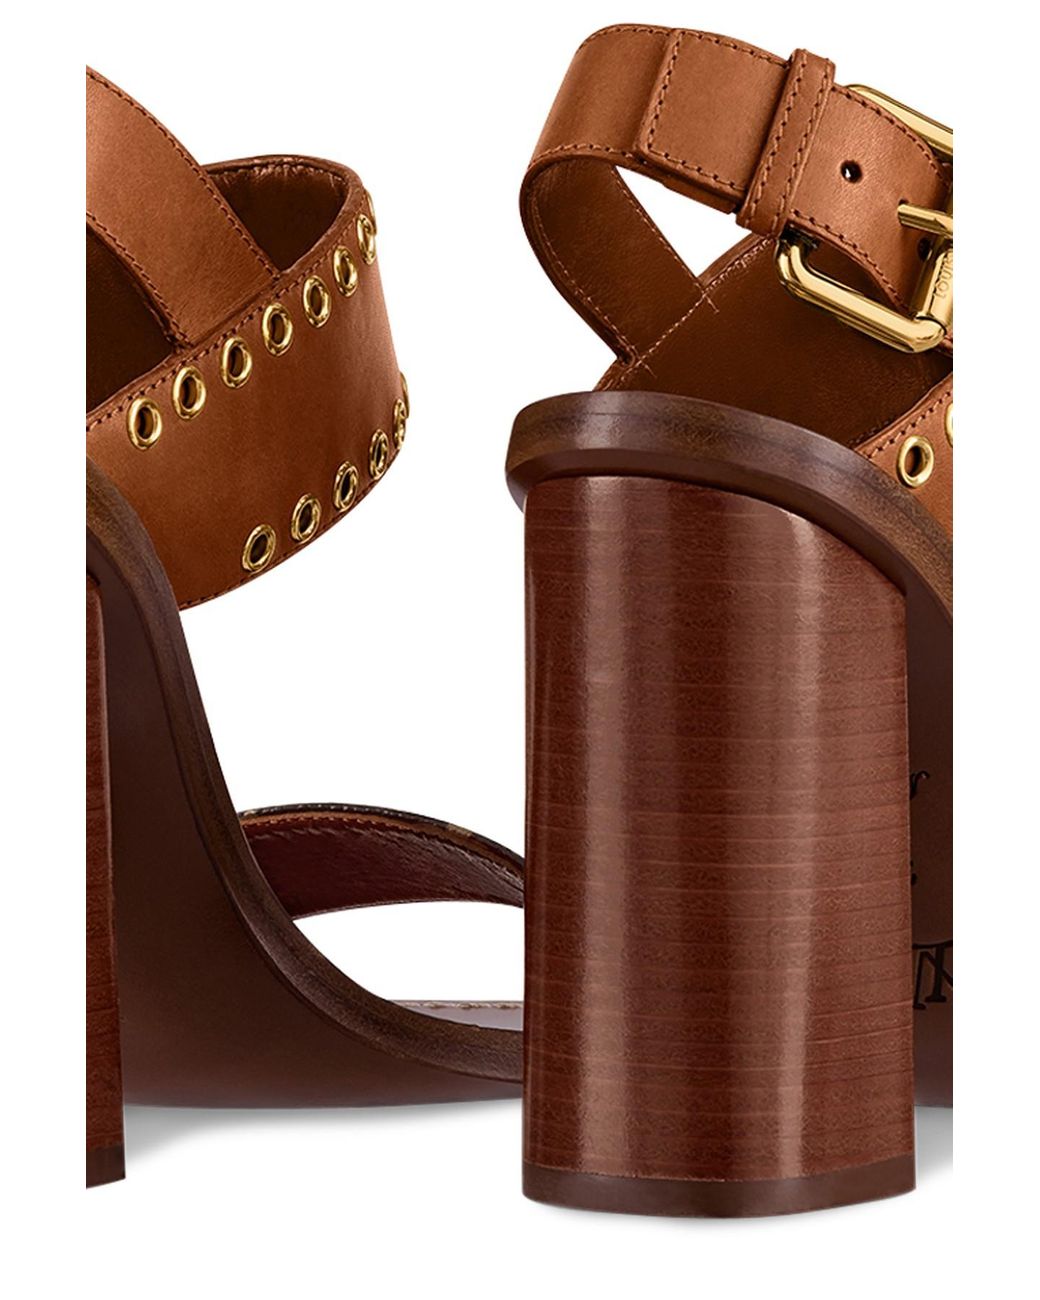 LOUIS VUITTON #39428 Brown & Golden Leather Sandal Heels (US 7.5